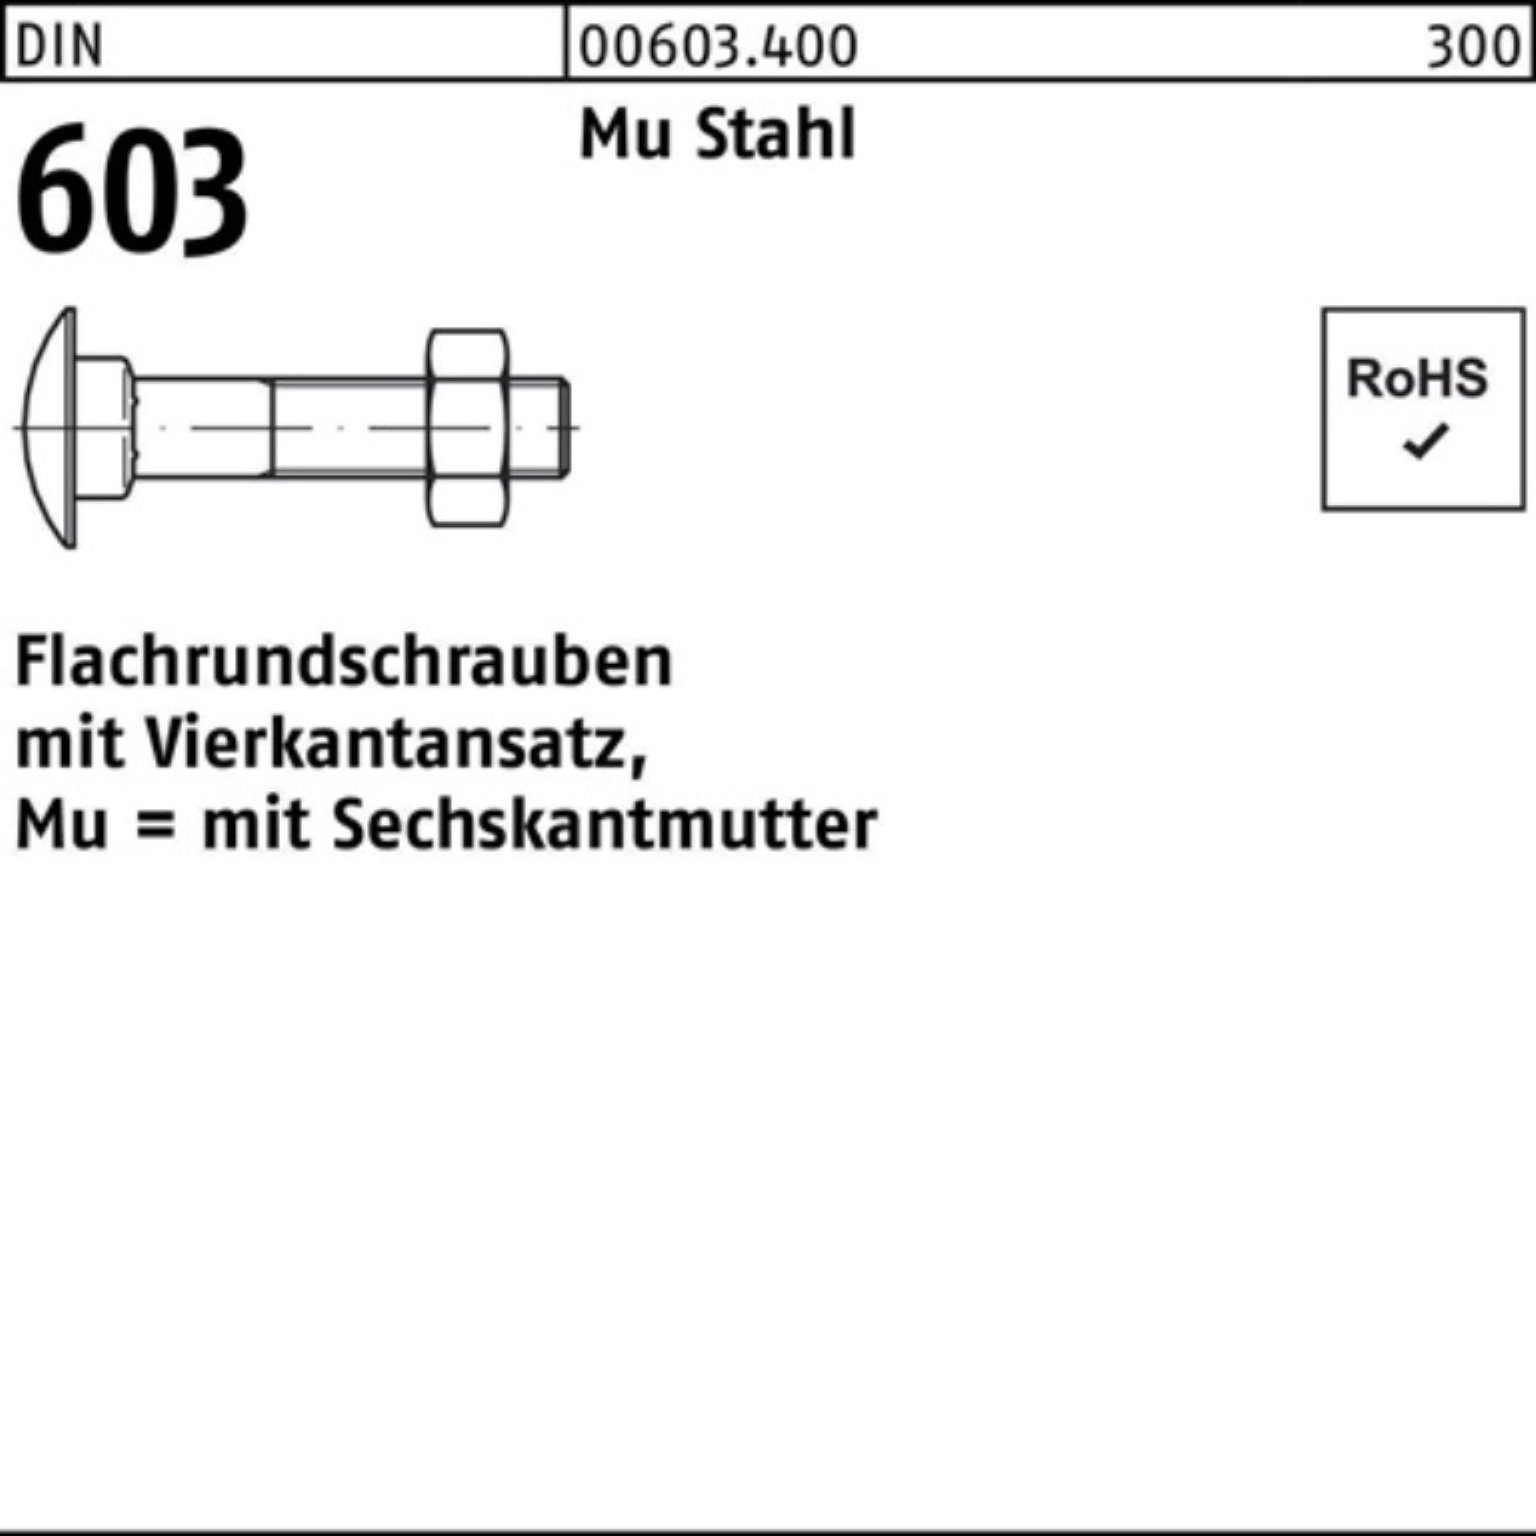 Vierkantansatz/6-ktmutter Pack Schraube 603 DIN M Flachrundschraube 100er Reyher M6x90